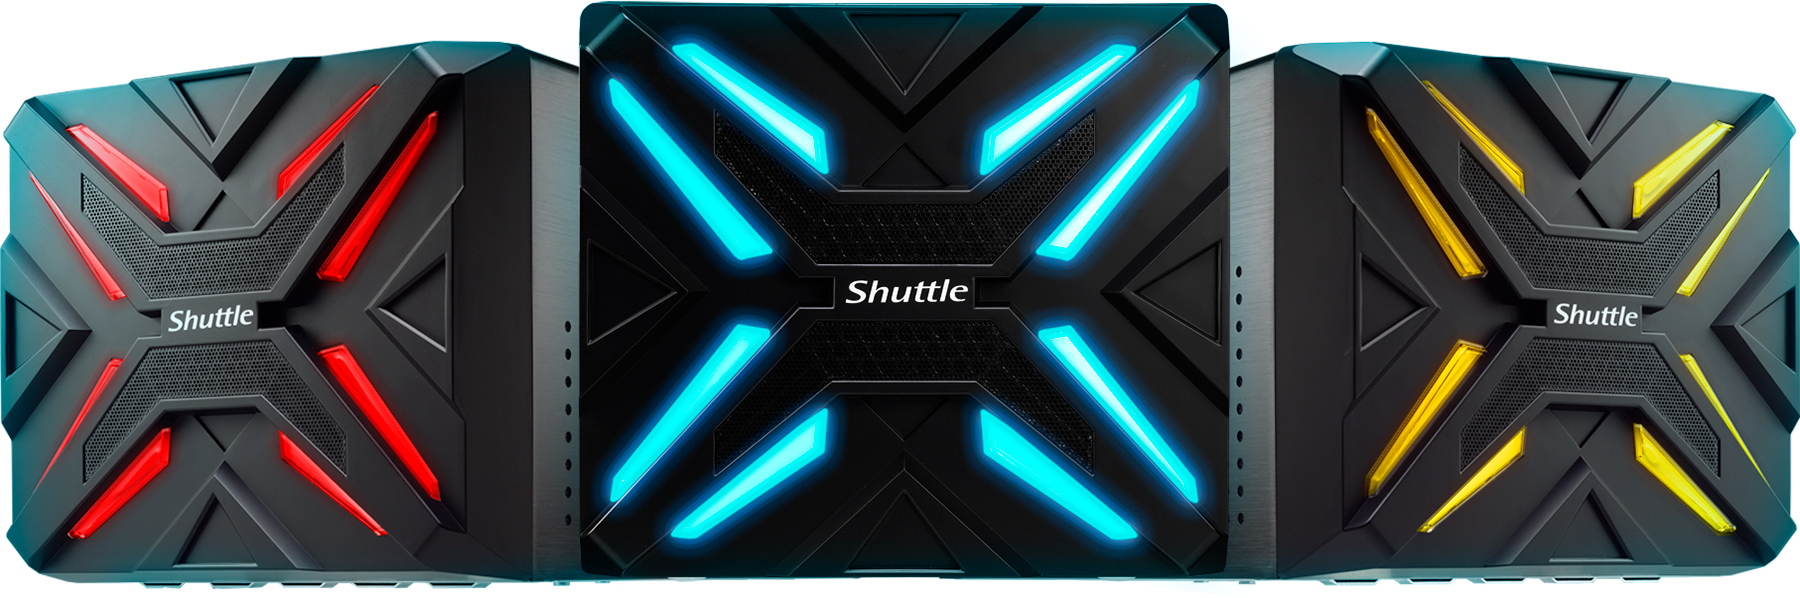 Shuttle XPC Gaming Cube SZ270R9, Intel Kabylake/Skylake Z270 LGA1151 i3/i5/i7/Pentium, Three Display Output, PCI-E x16/x4 - Click Image to Close